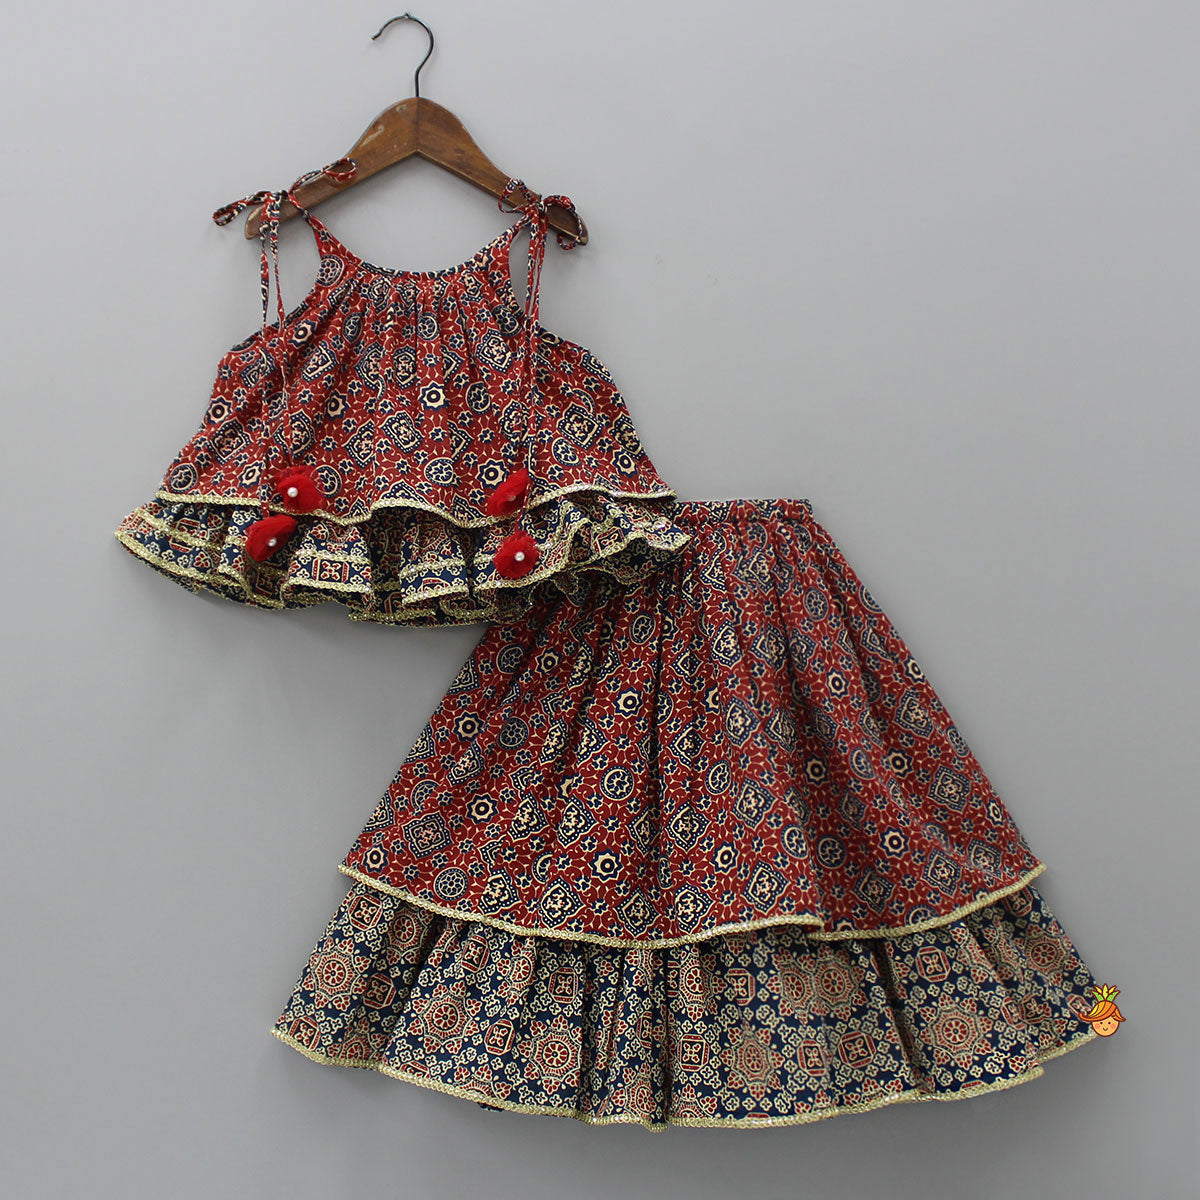 Velvet Maroon Baby Girl Wedding Dress, Size: 36.0 at Rs 240 in Surat